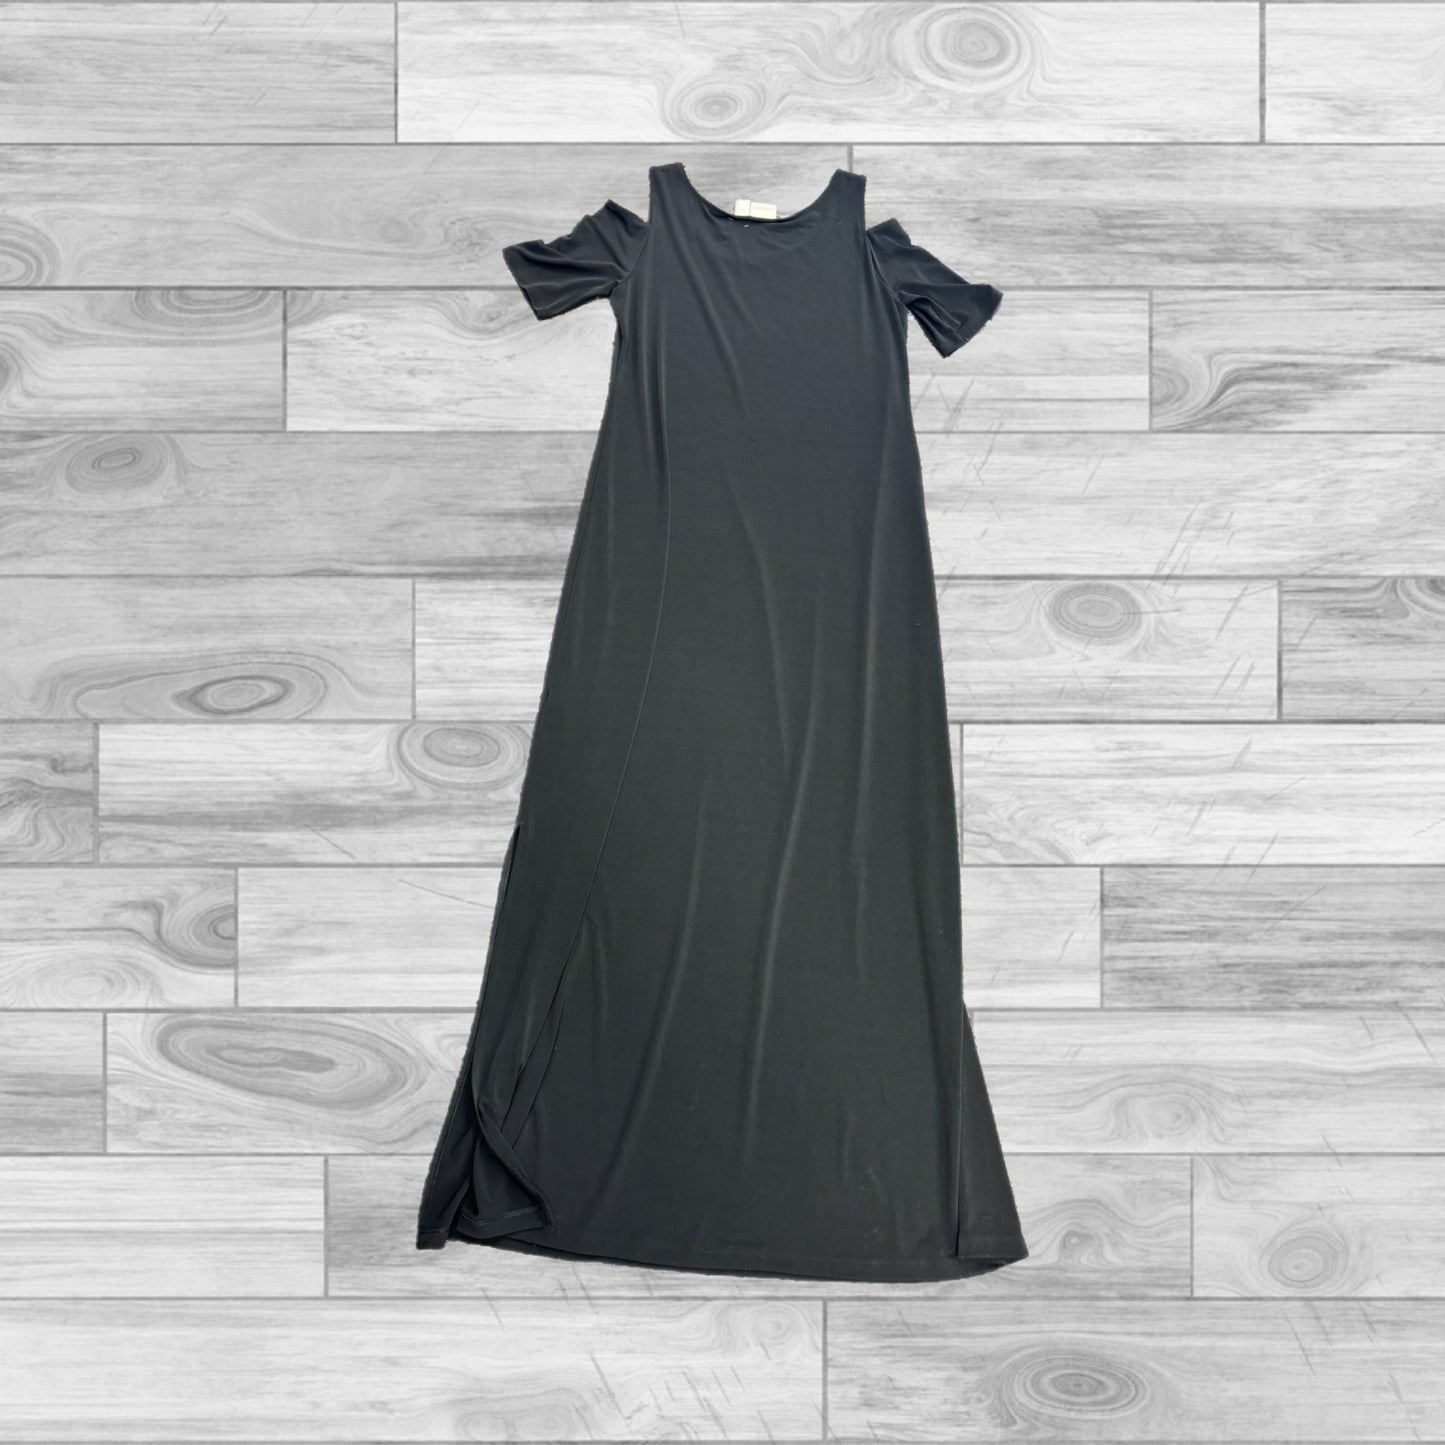 Black Dress Long Short Sleeve Chicos, Size 0 (small)